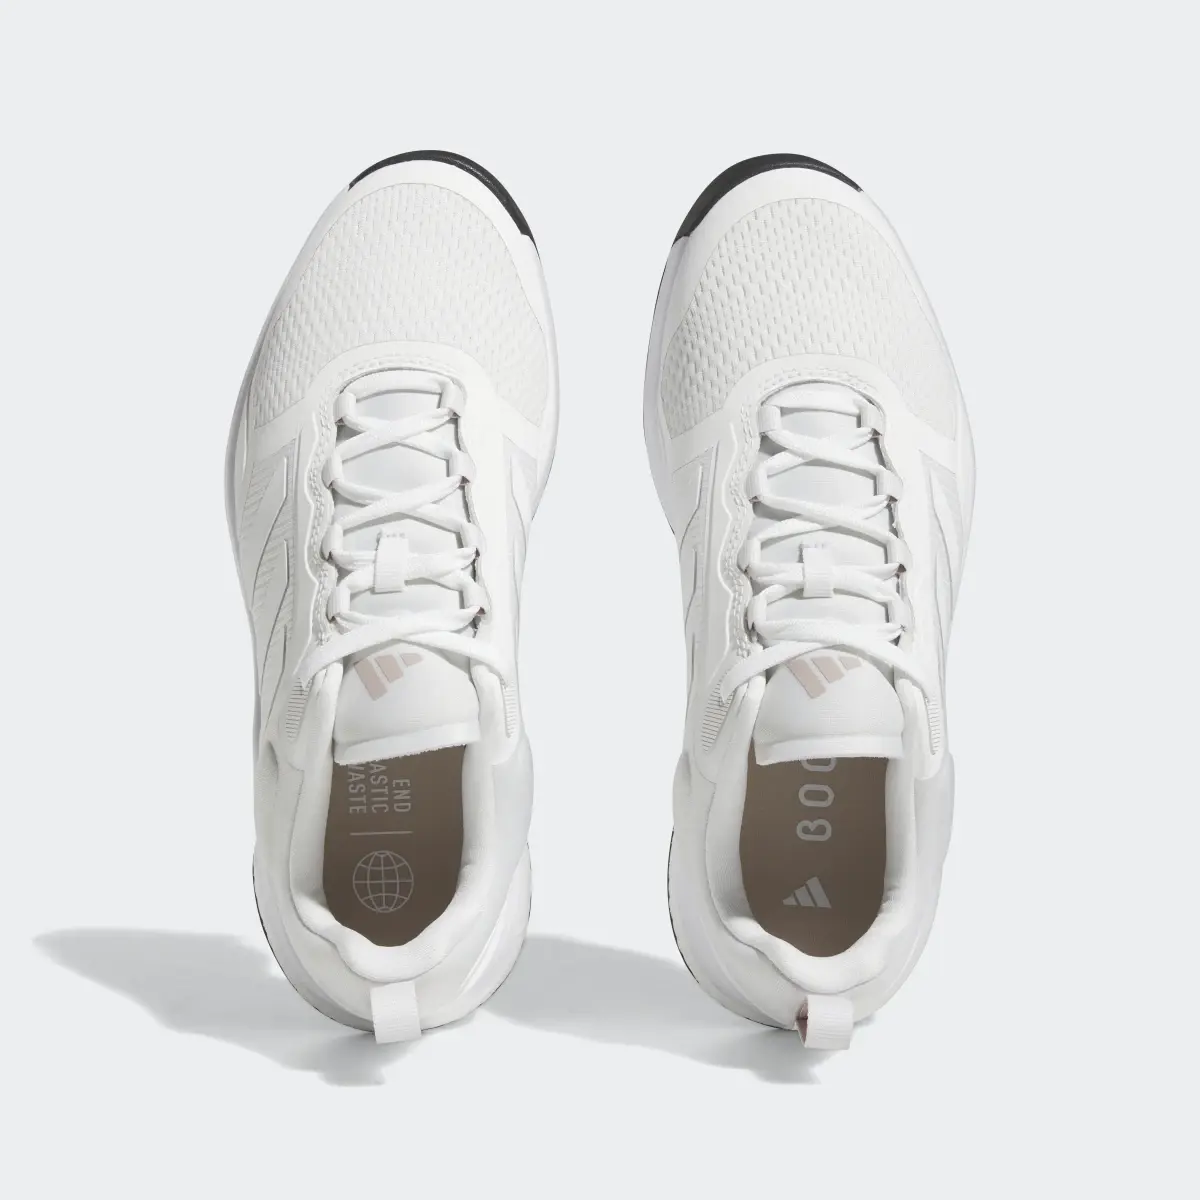 Adidas Zoysia Spikeless Golf Shoes. 3